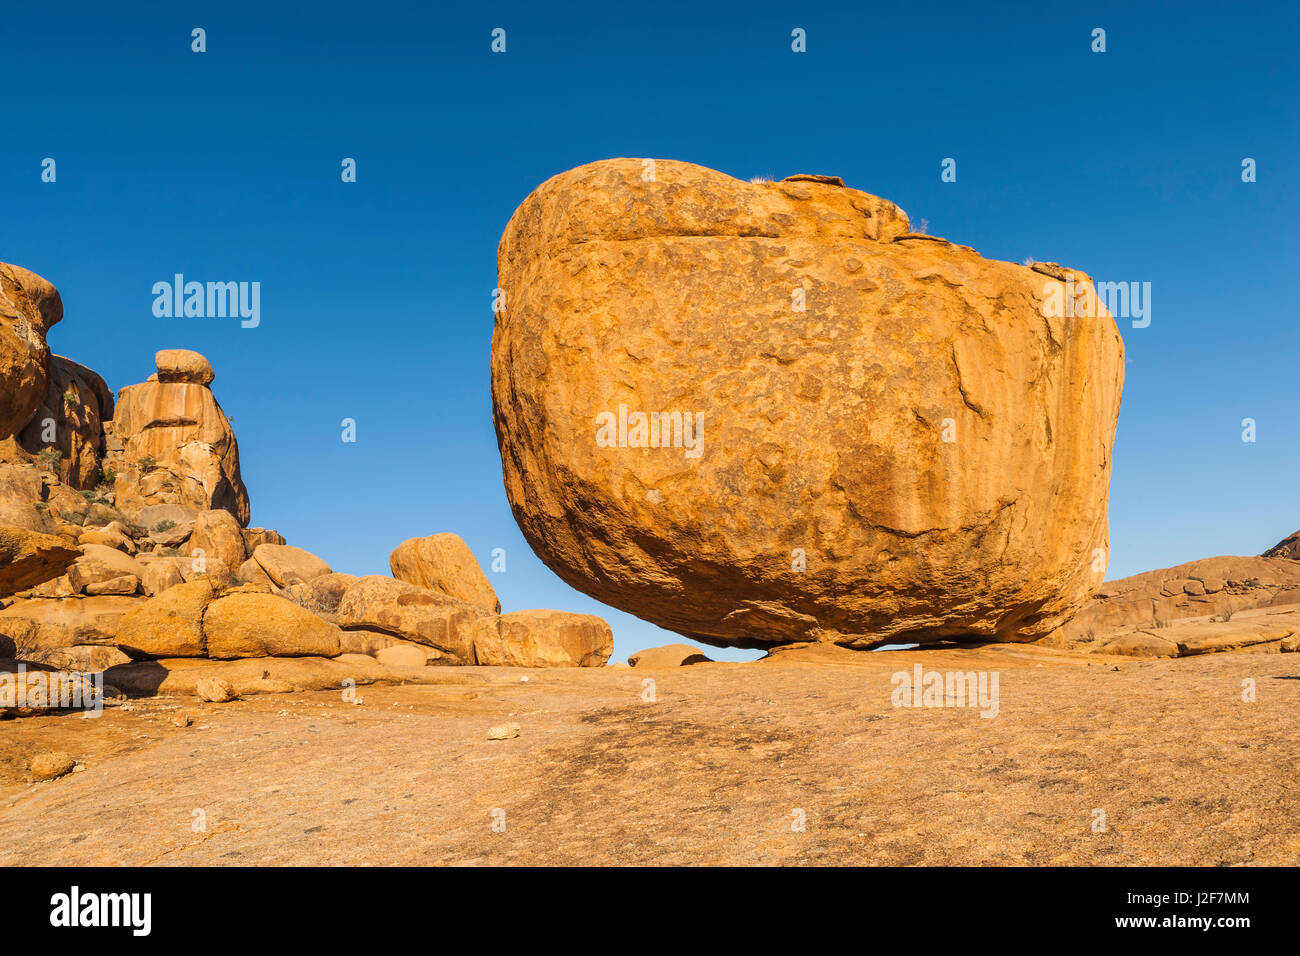 Enormous granite boulder against blue sky Stock Photo